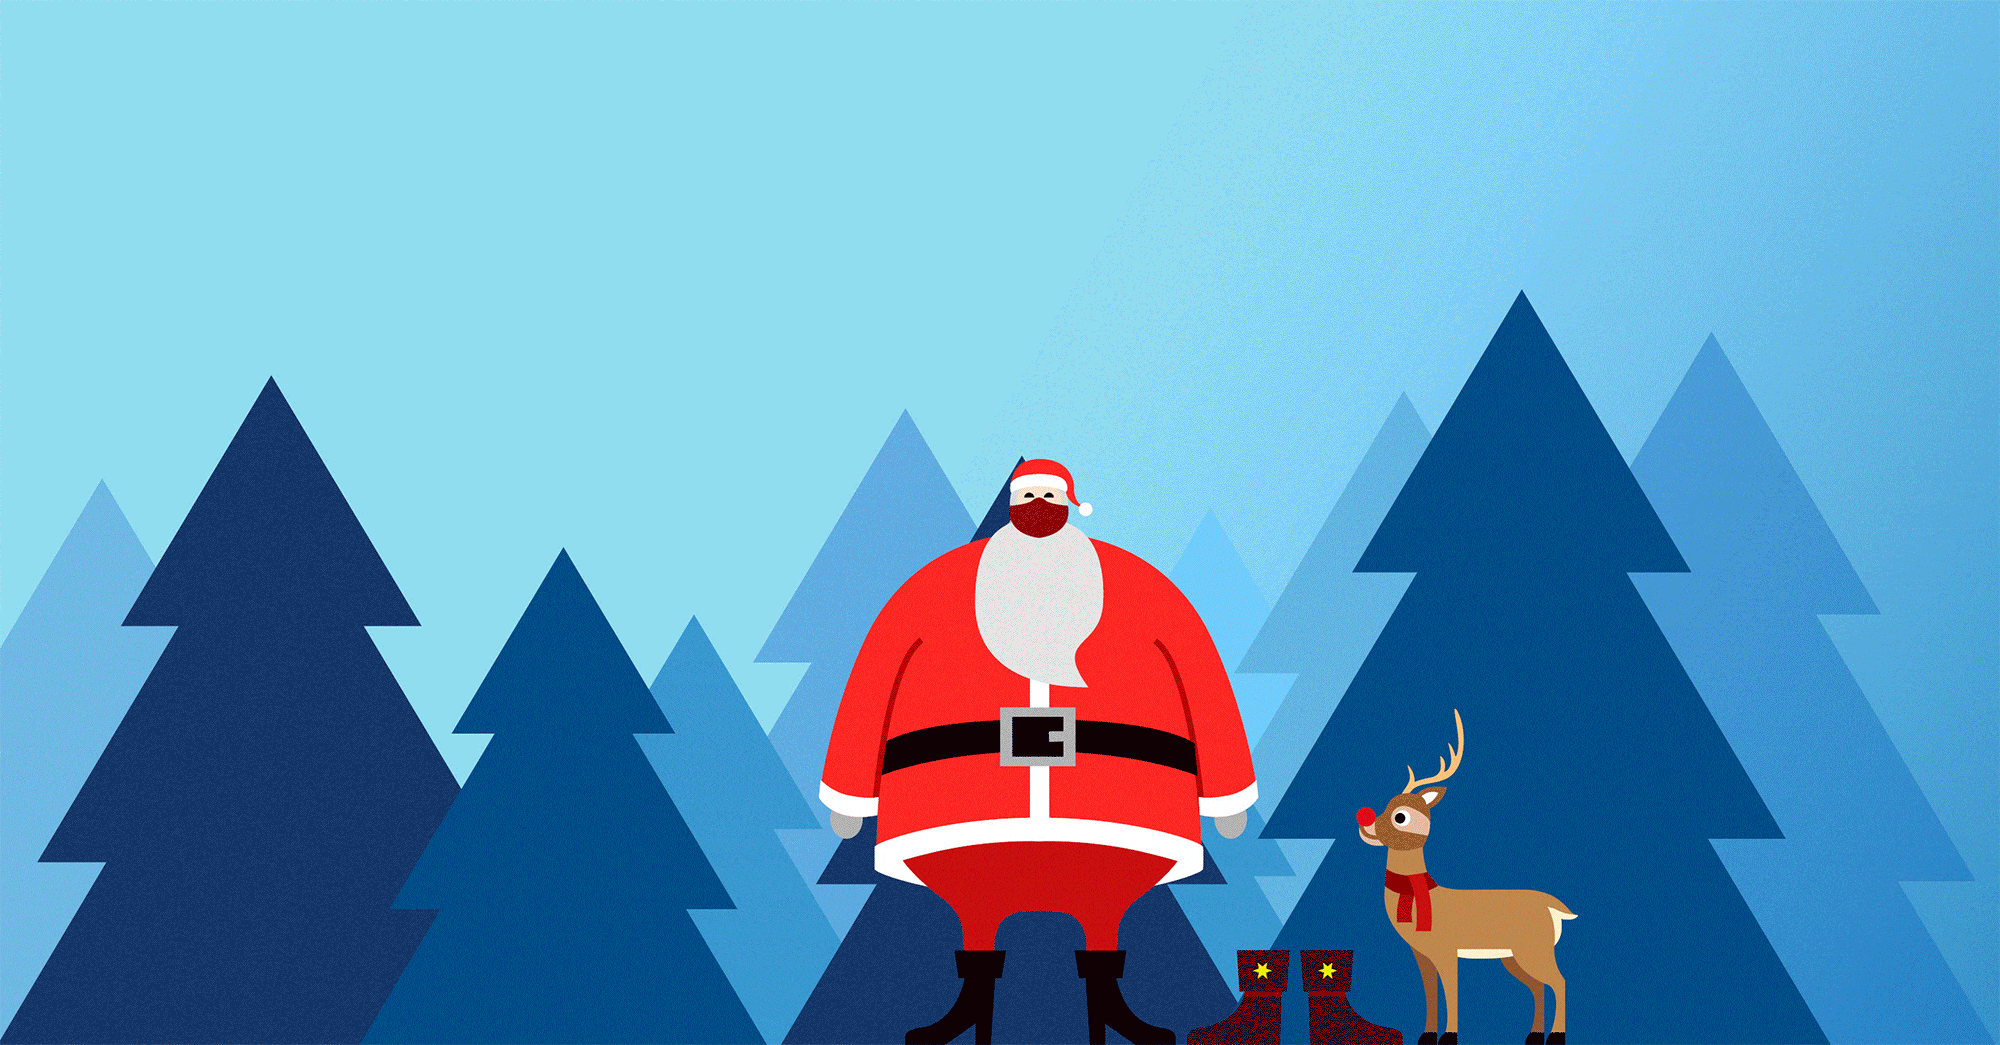 Christmas GIF with Father Christmas, Rudolf the rednose reindeer, Christmas tree and presents